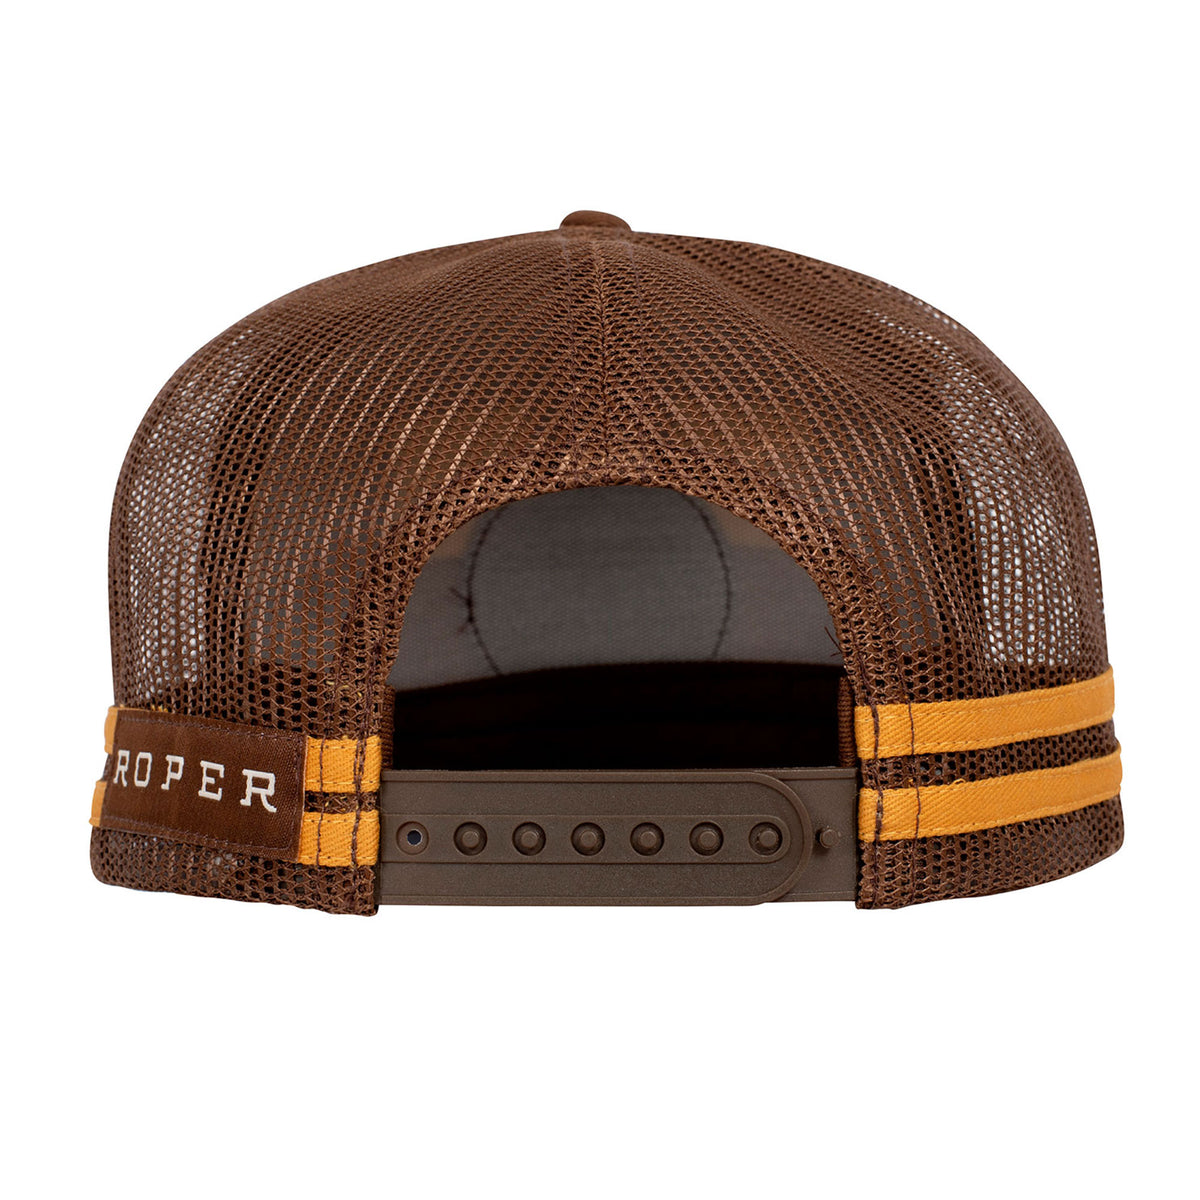 Roper Trucker Cap - Mustard/Brown